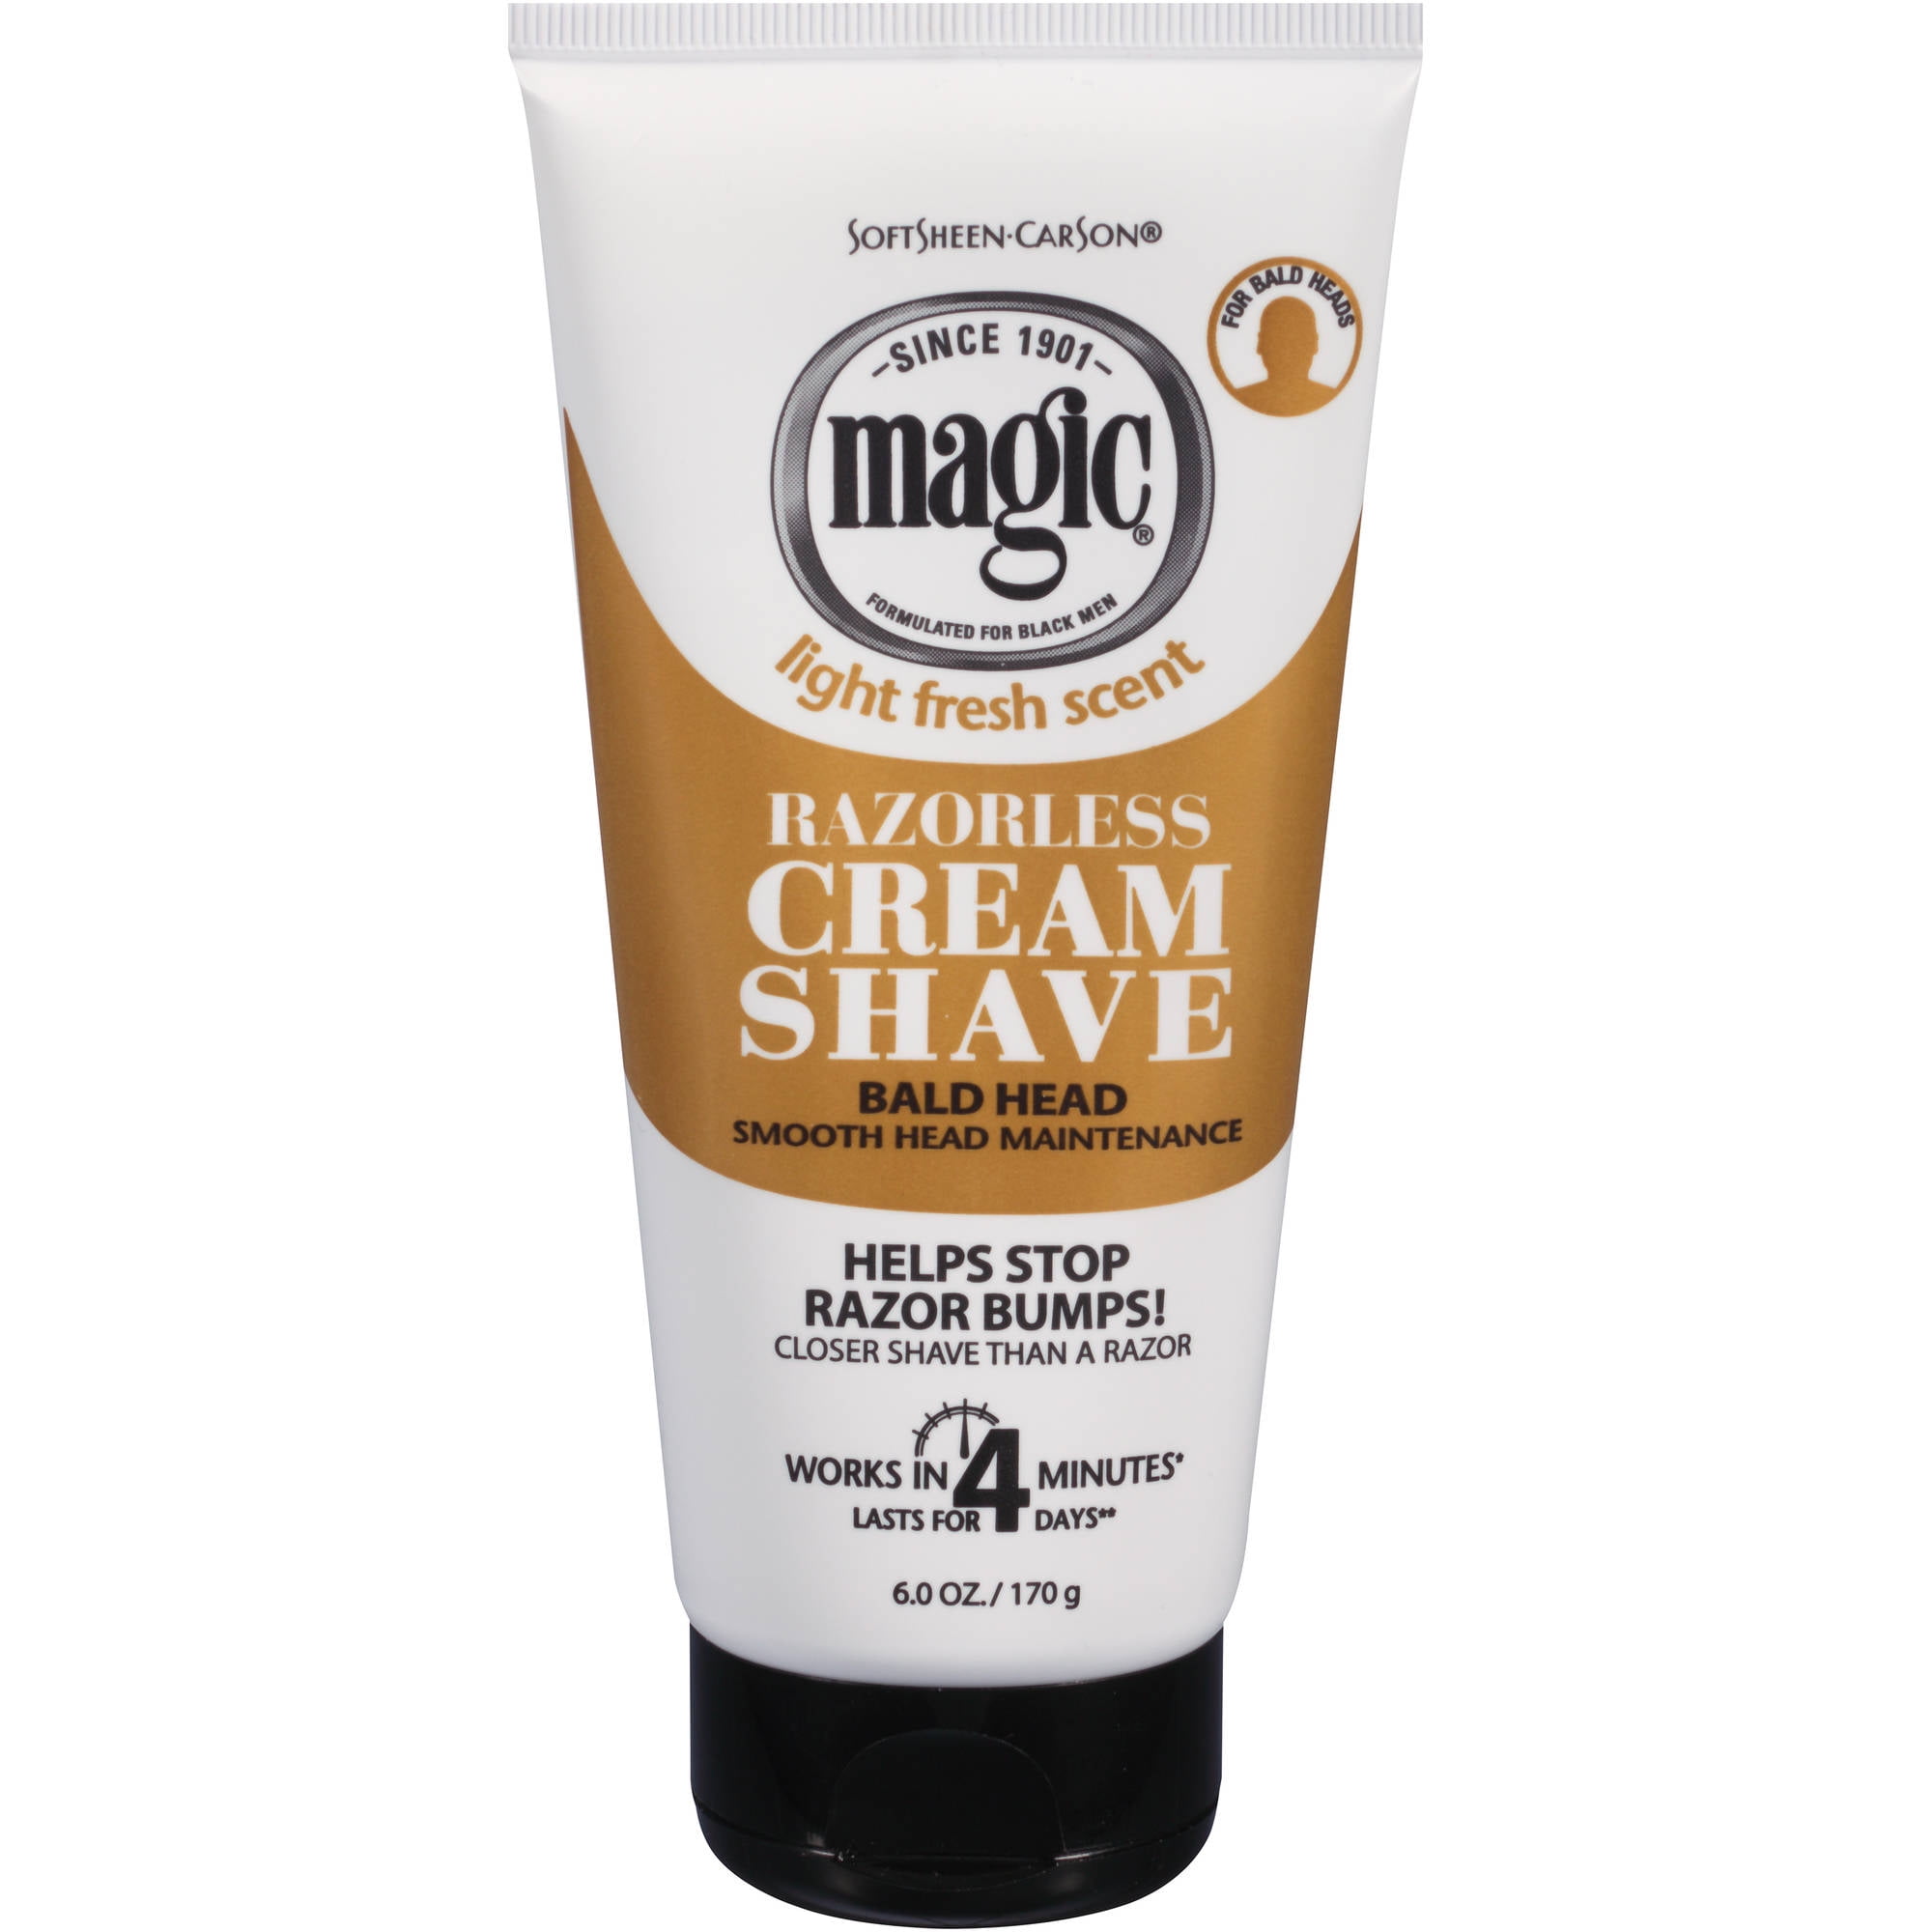 SoftSheen-Carson Magic Razorless Cream Shave, Depilatory Cream for a Smooth Bald Head, 6 oz